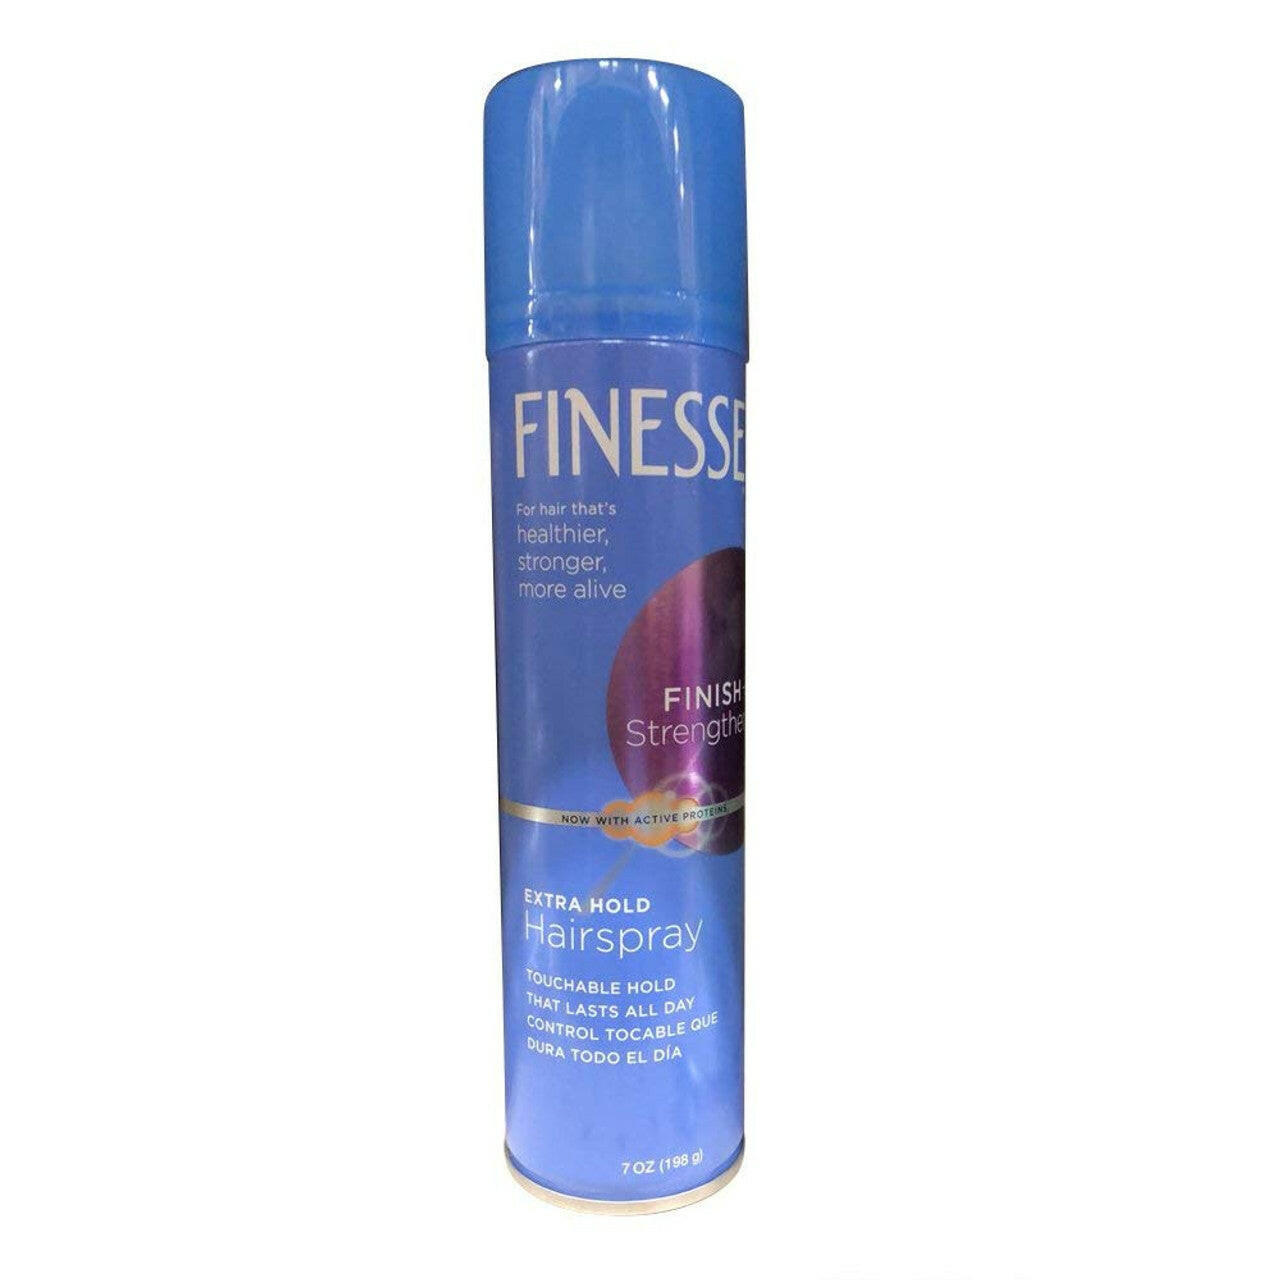 Finesse Self Adjusting Extra Hold Hair Spray Unisex, 7oz